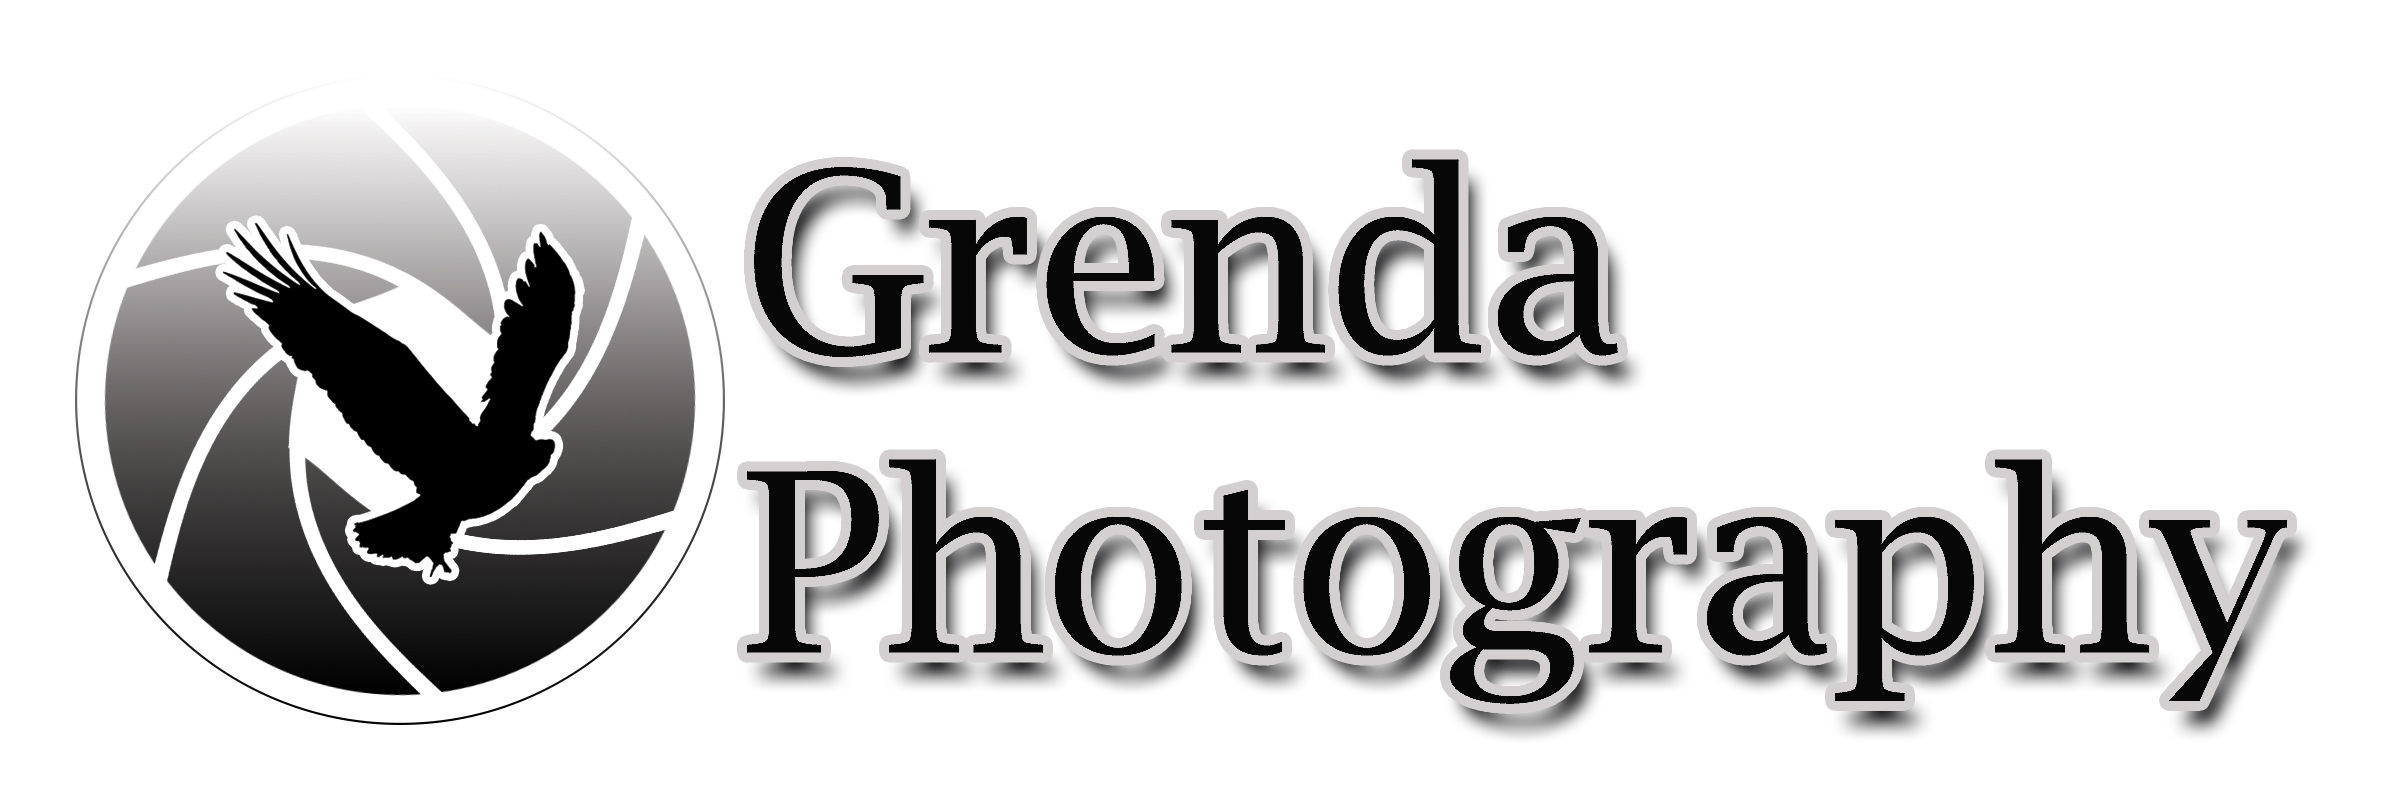 Grenda Photography